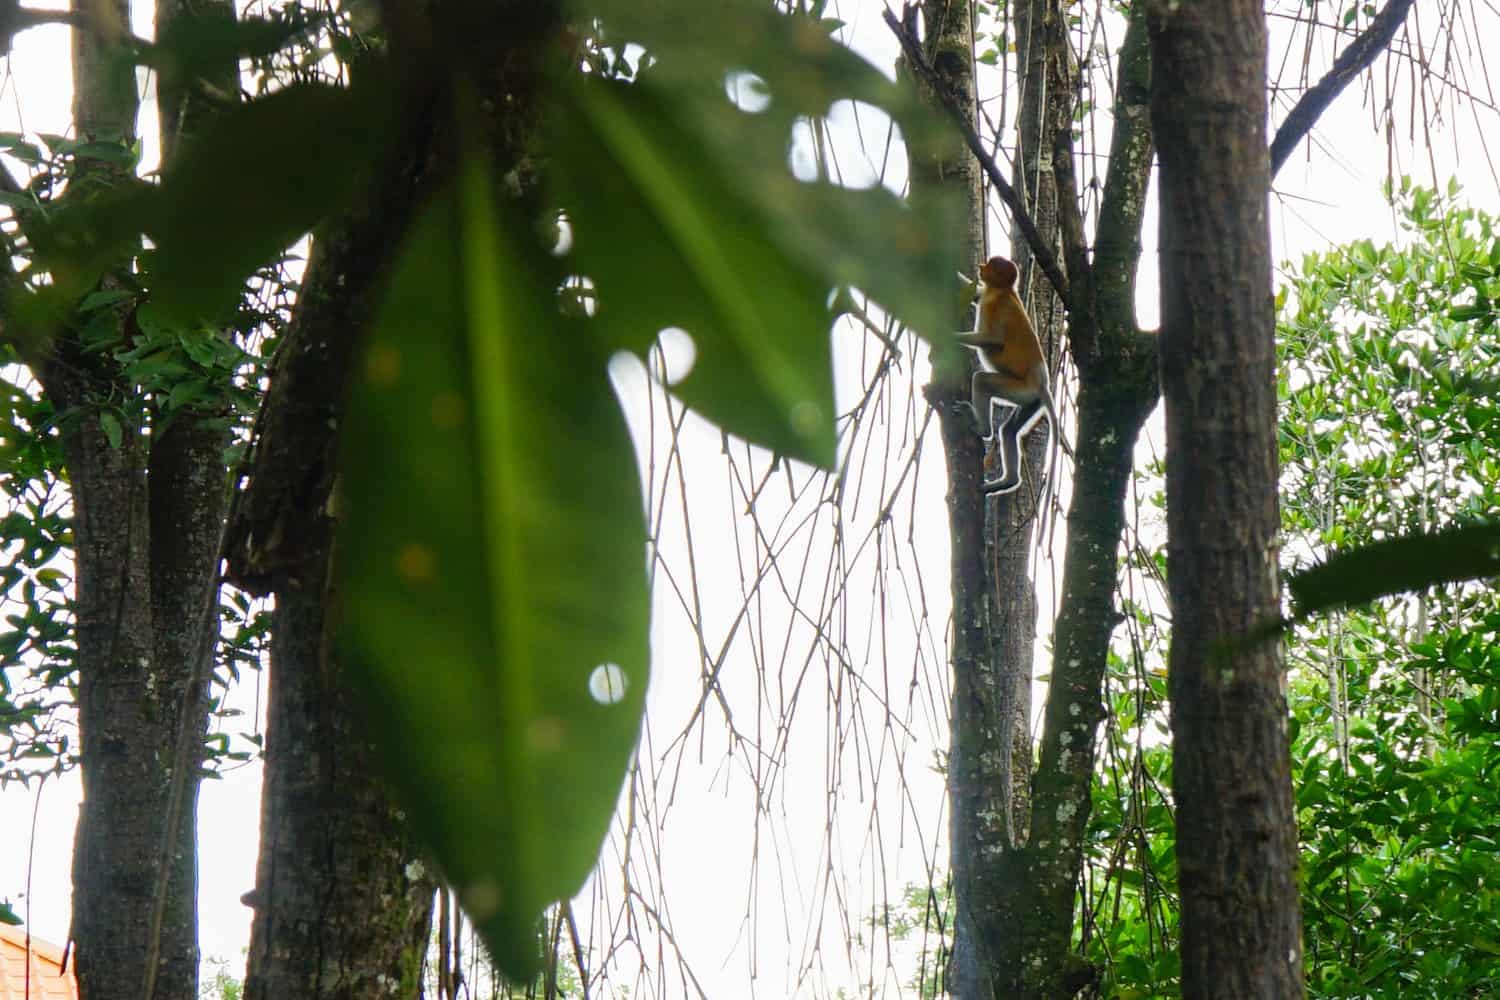 Proboscis monkey climbing a tree